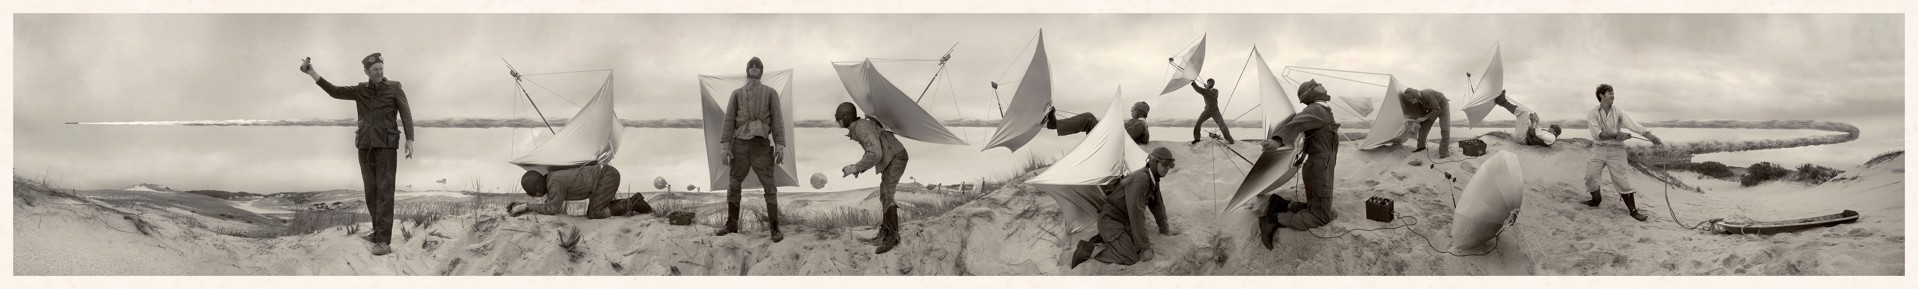 Crash Landing (Radarmen) by Kahn & Selesnick: Panoramas